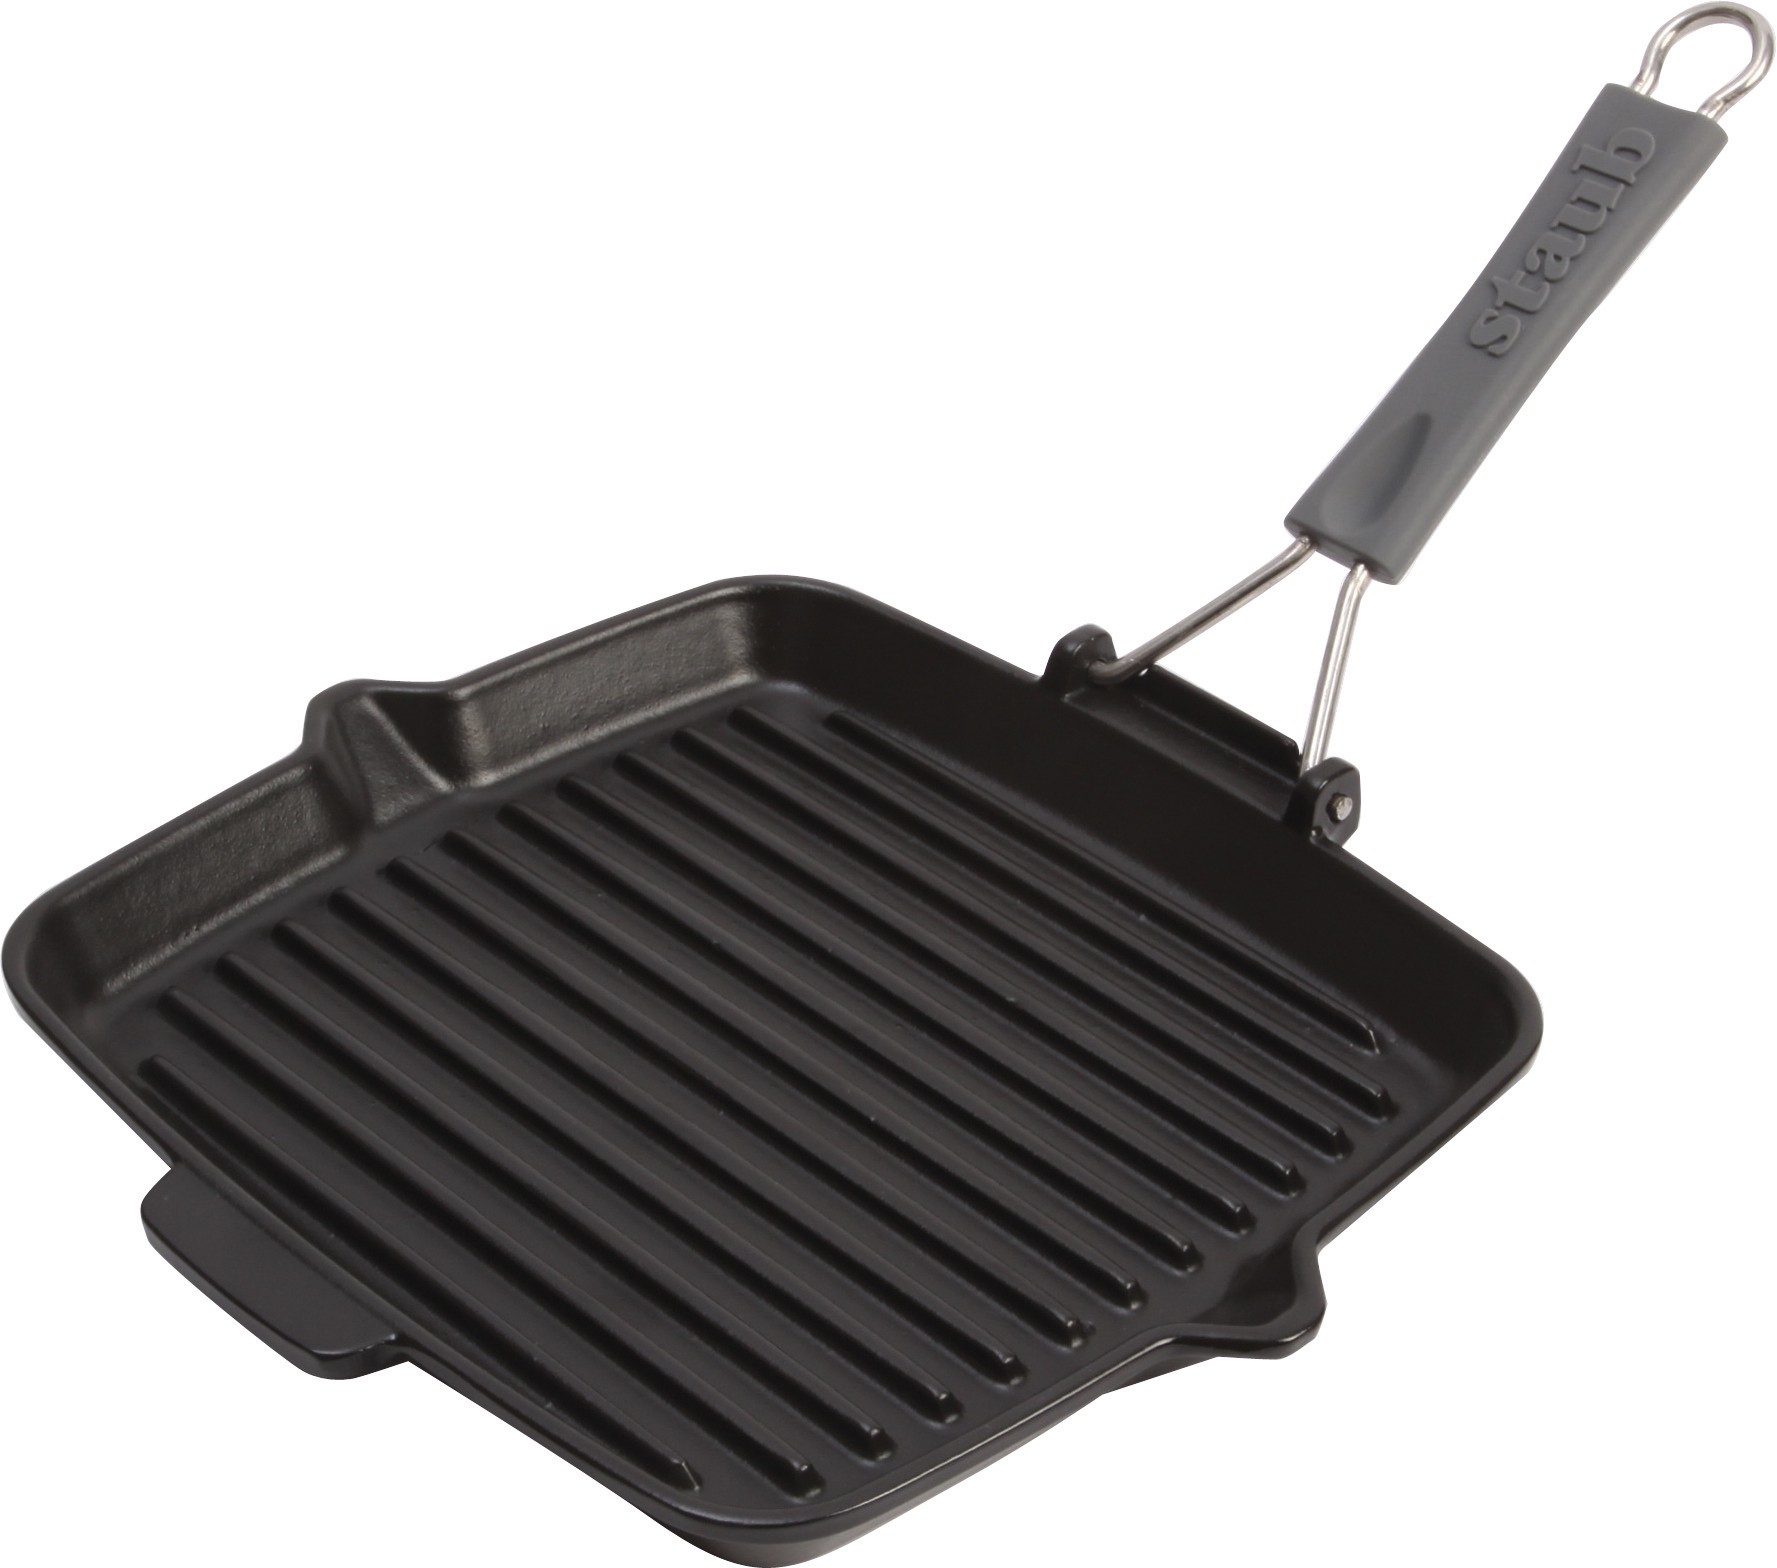 Staub cast iron frying pan with handle - 24cm